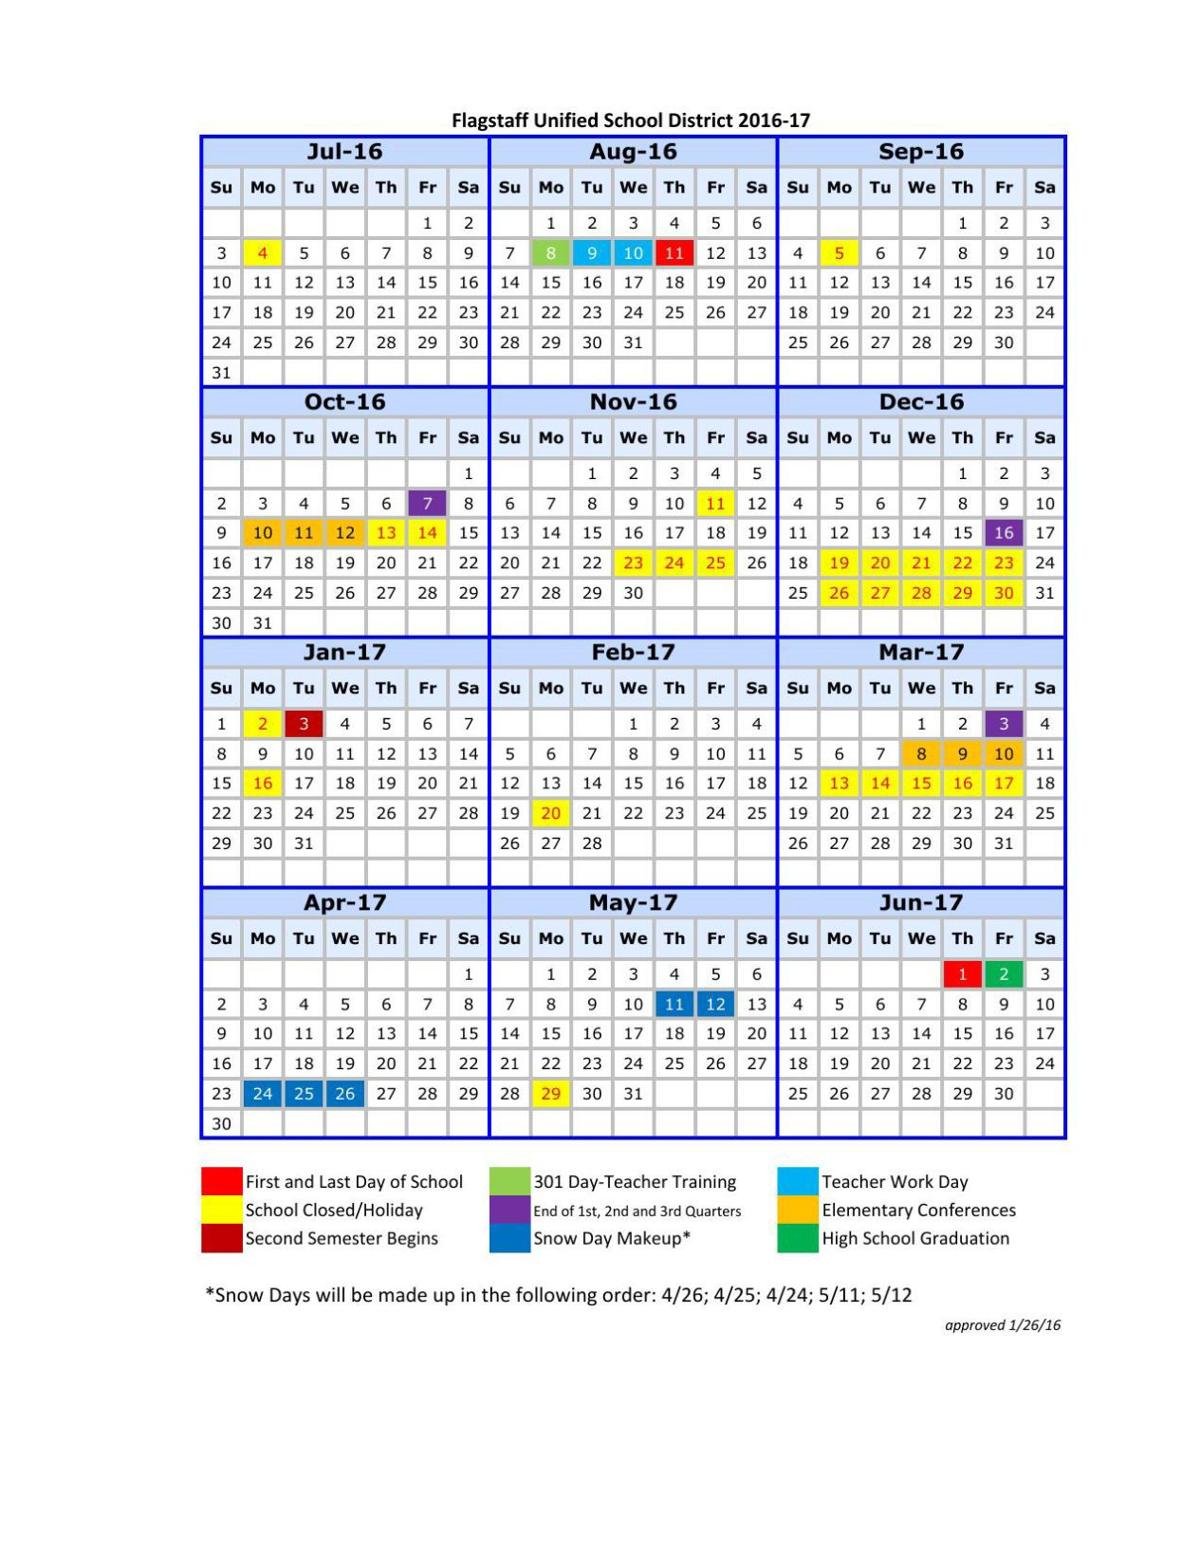 FUSD Calendar 201617